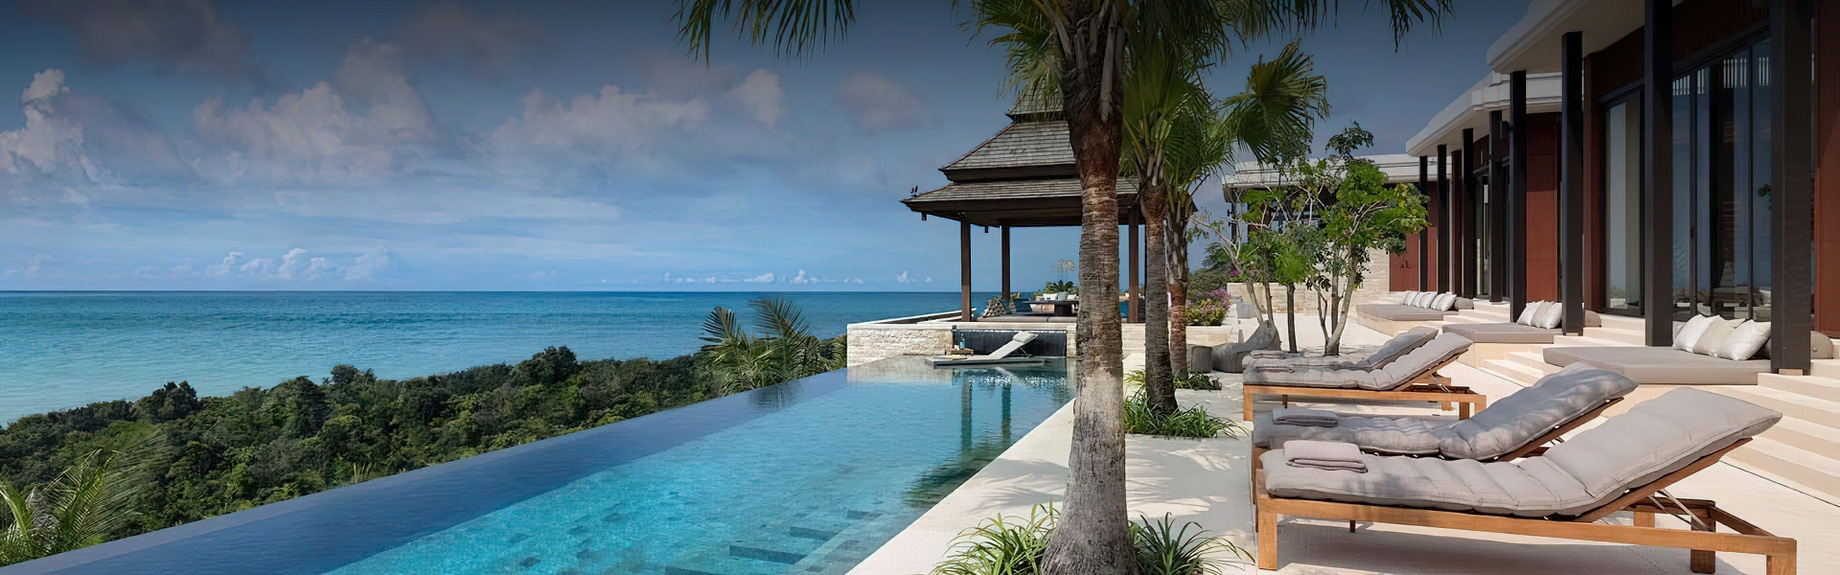 Anantara Layan Phuket Resort & Residences – Thailand – Five Bedroom Sea View Residence Pool Deck